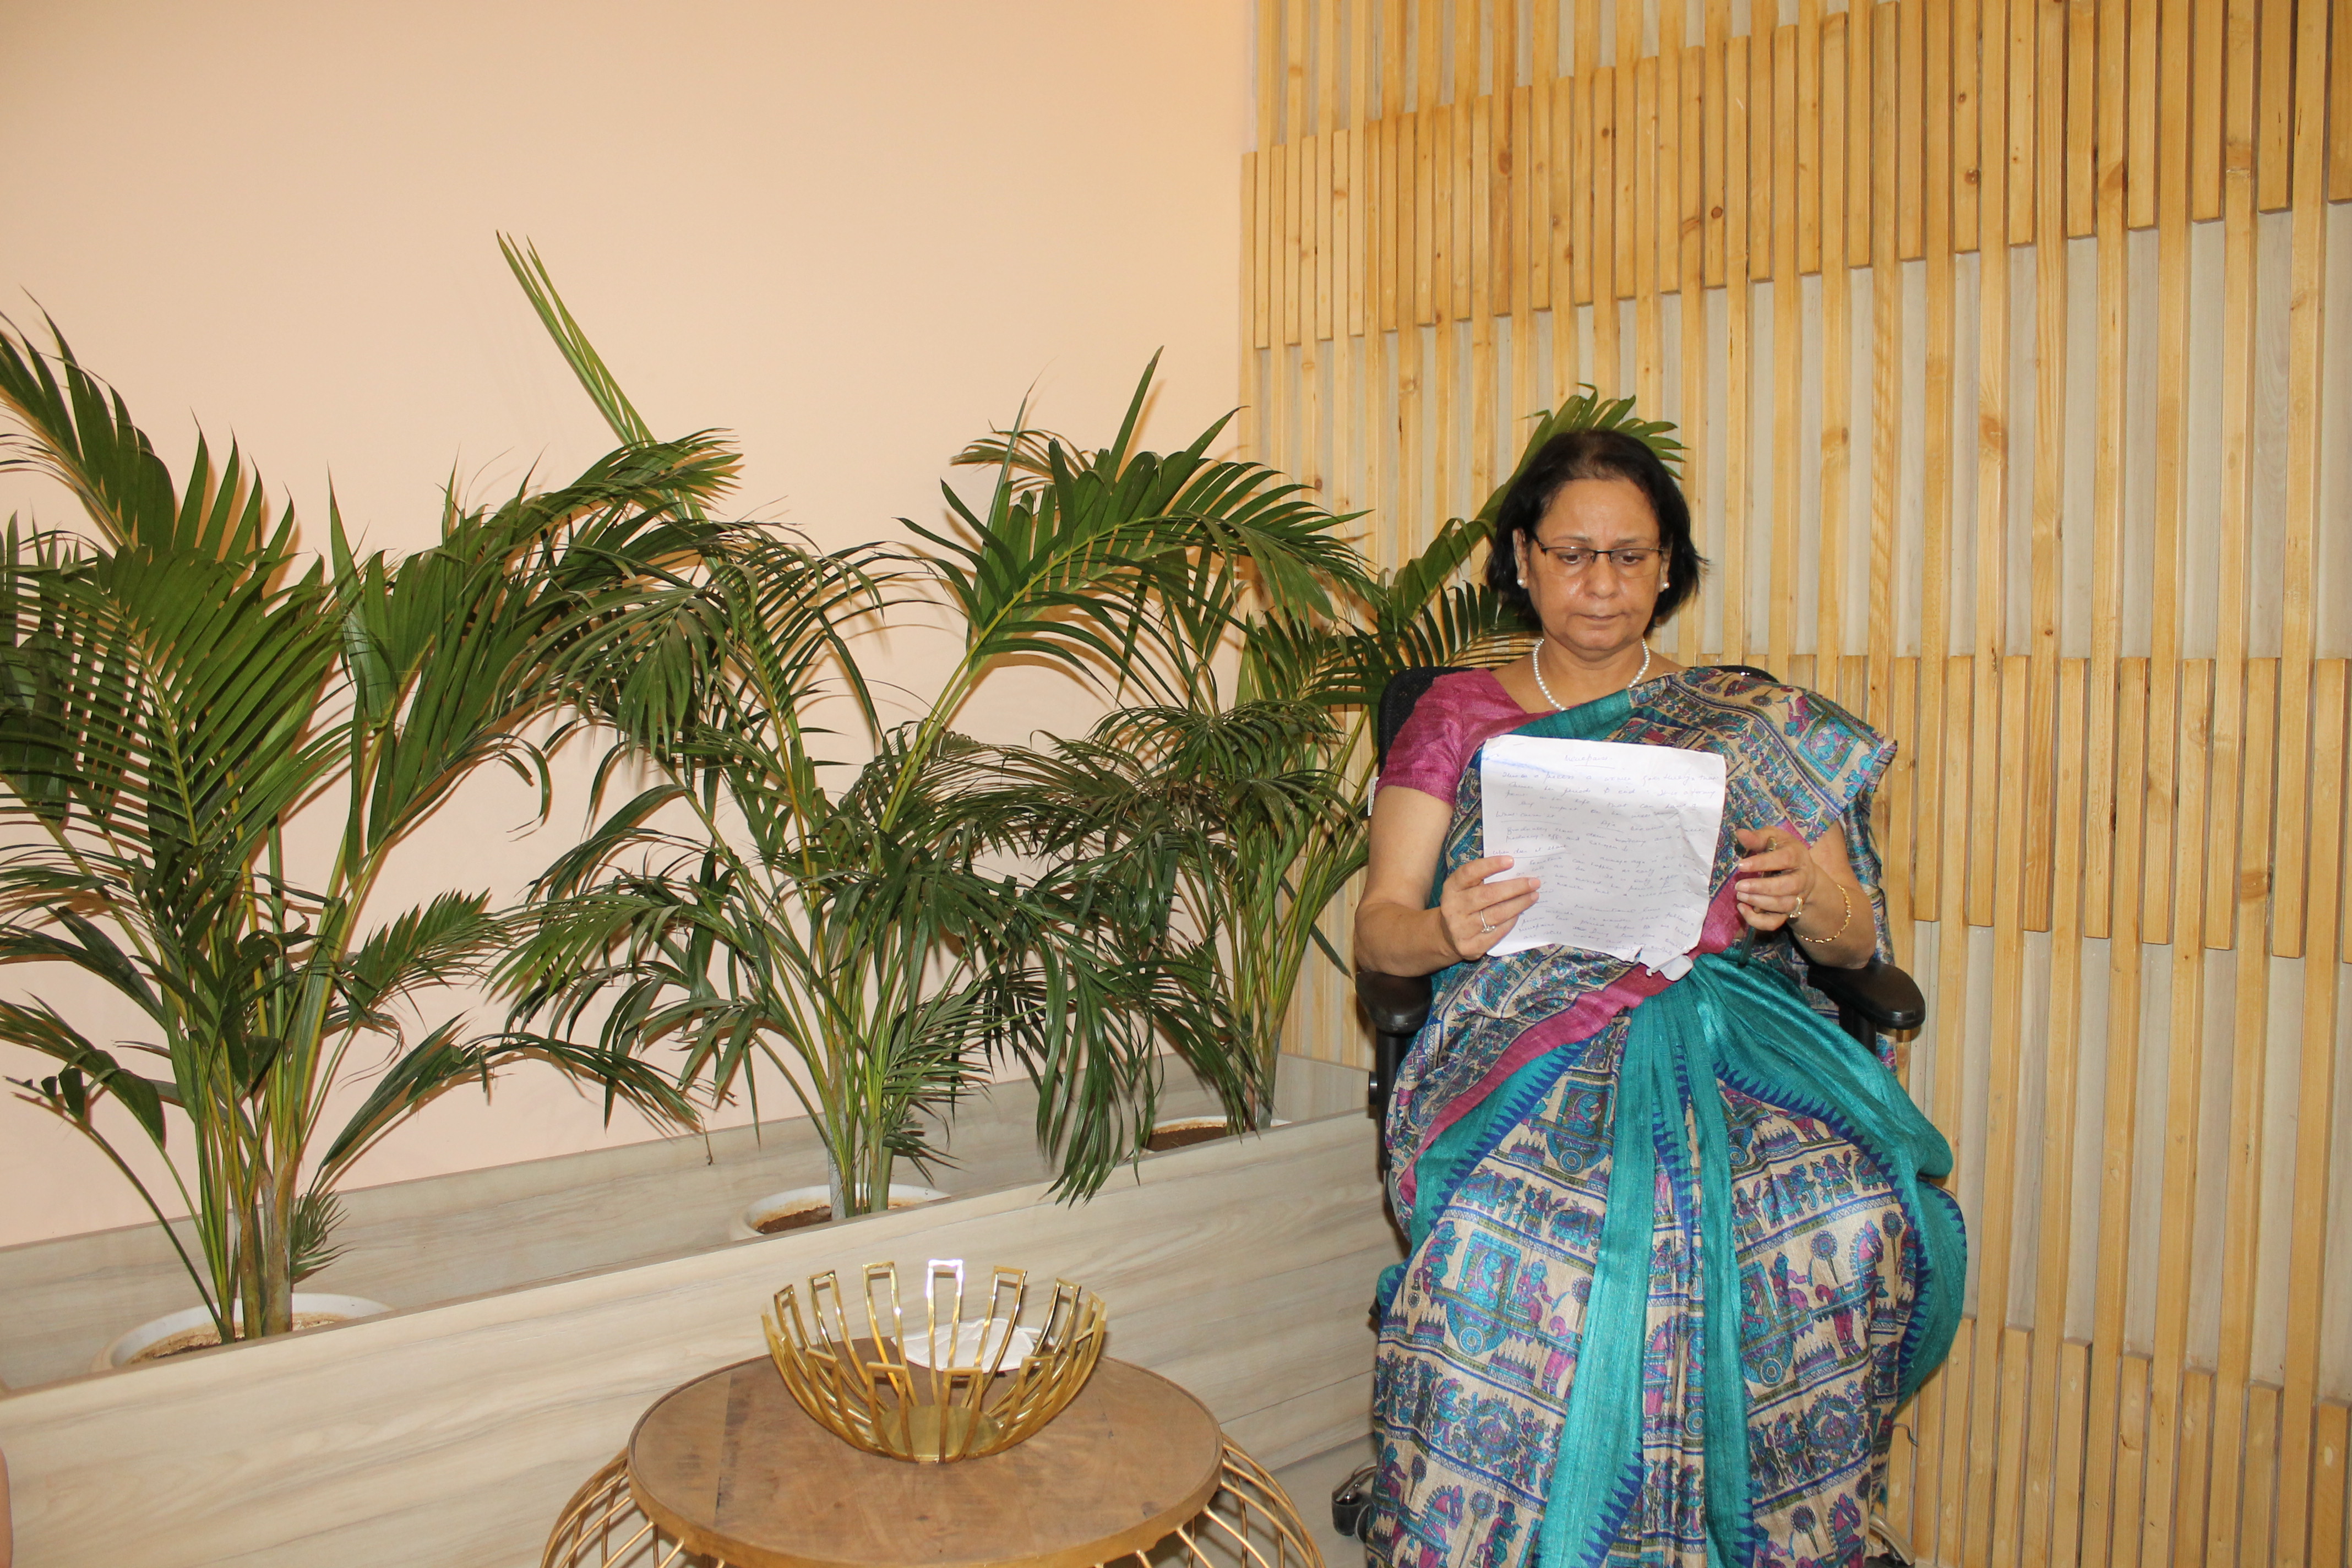 Best Infertility and IVF specialist in Gurgaon - Dr. Bindu GargHealth and BeautyHospitalsGurgaonDLF